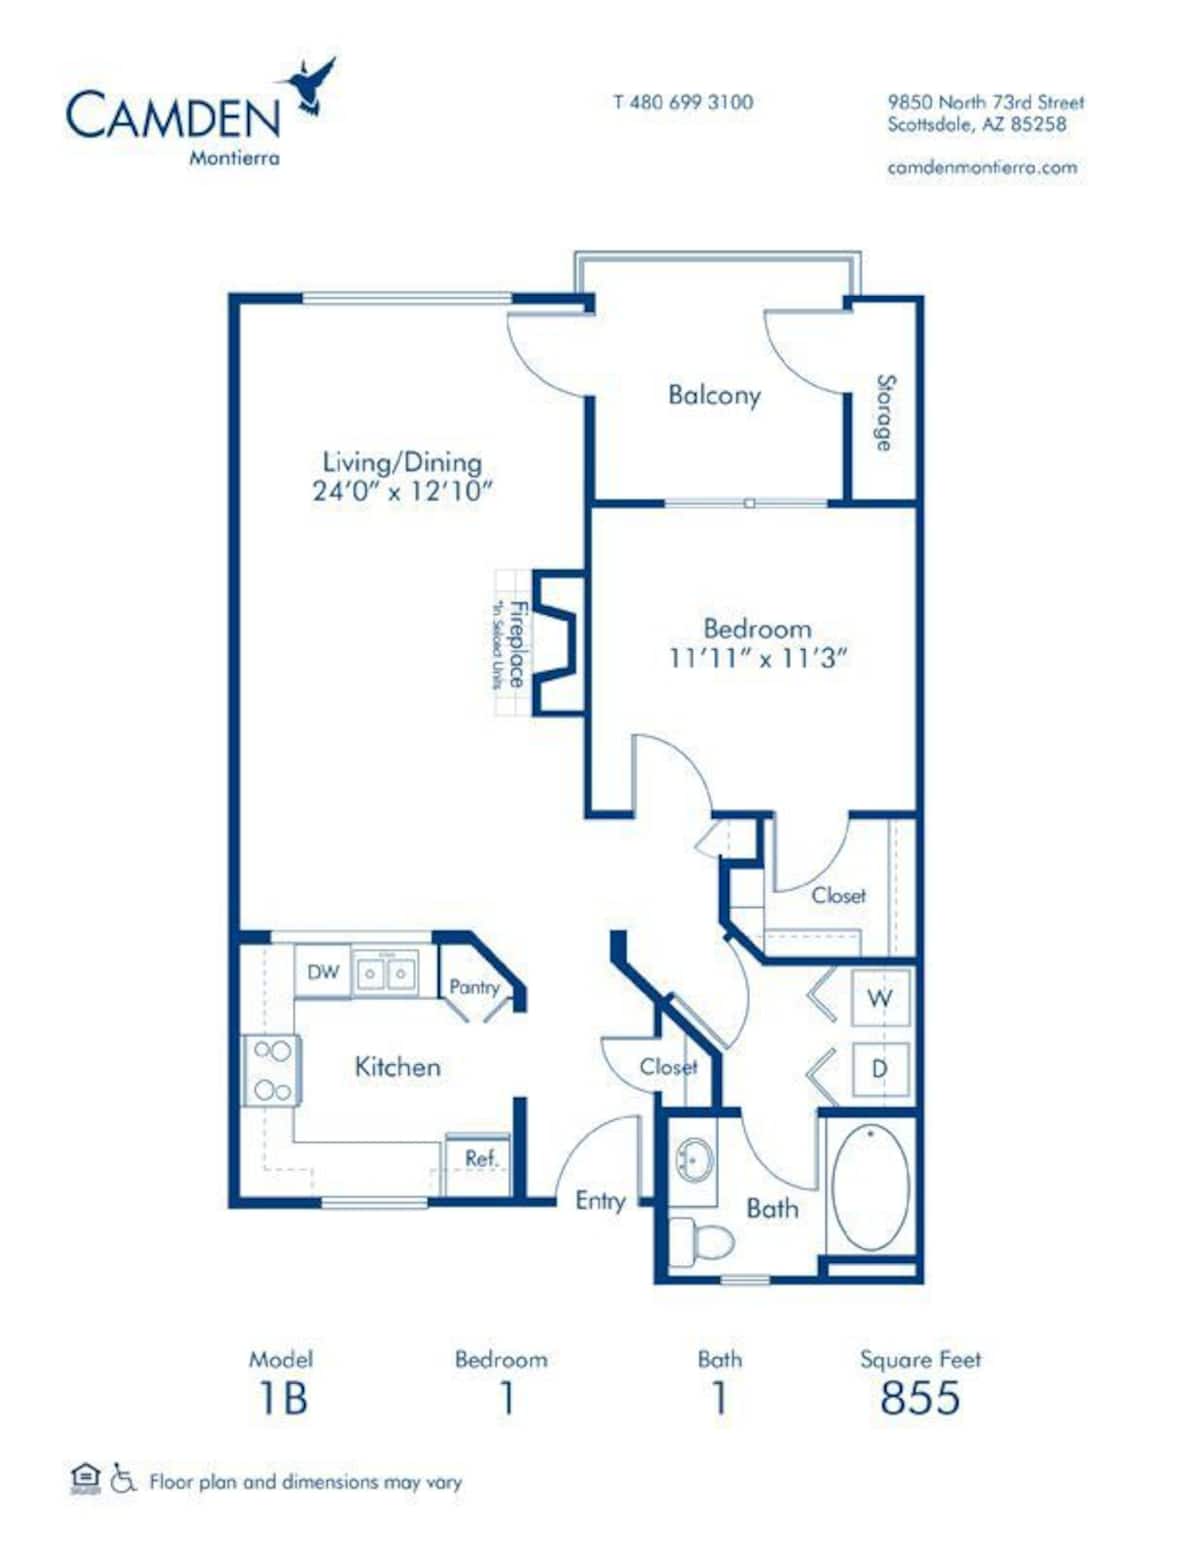 Floorplan diagram for 1B, showing 1 bedroom